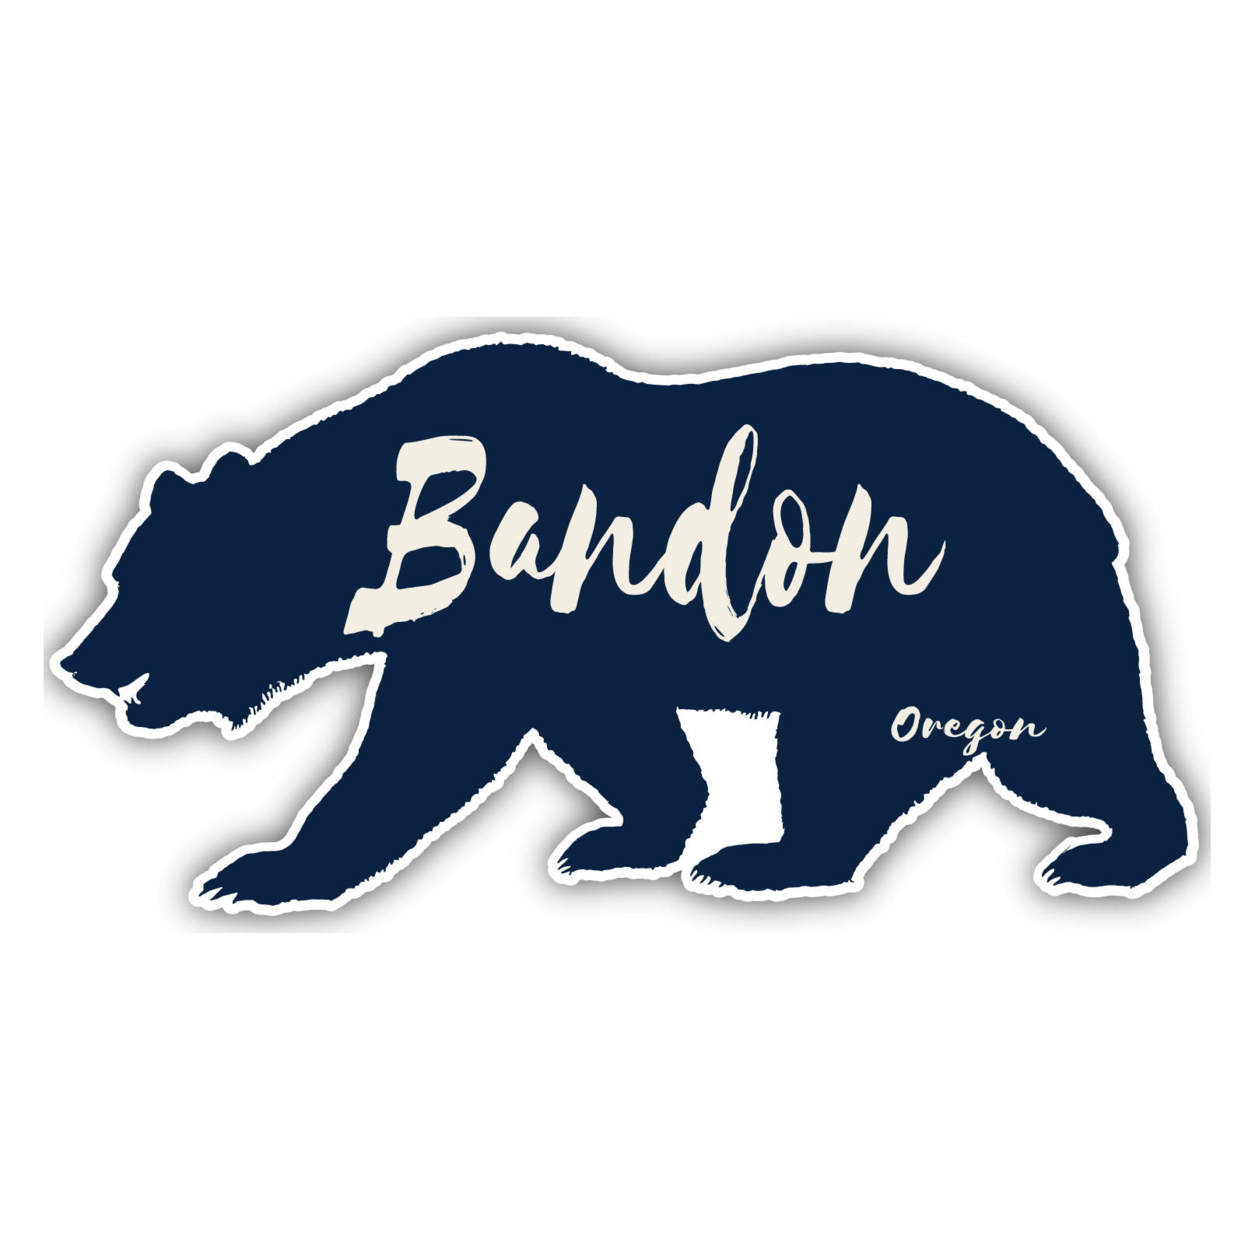 Bandon Oregon Souvenir Decorative Stickers (Choose Theme And Size) - 4-Pack, 12-Inch, Tent